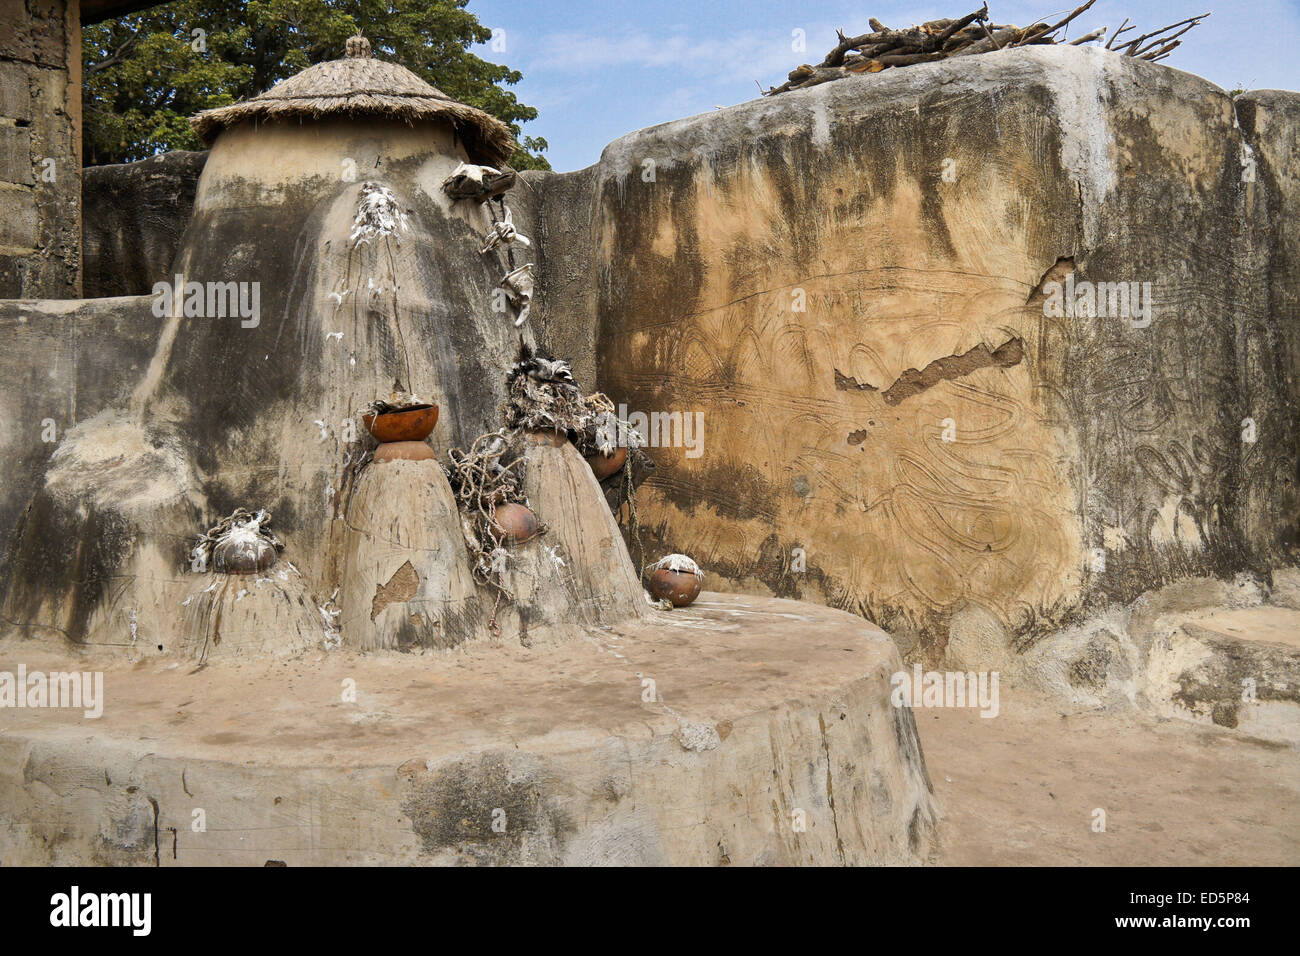 Talensi tribal ancestor shrine with sacrificial offerings, Tongo, Ghana Stock Photo